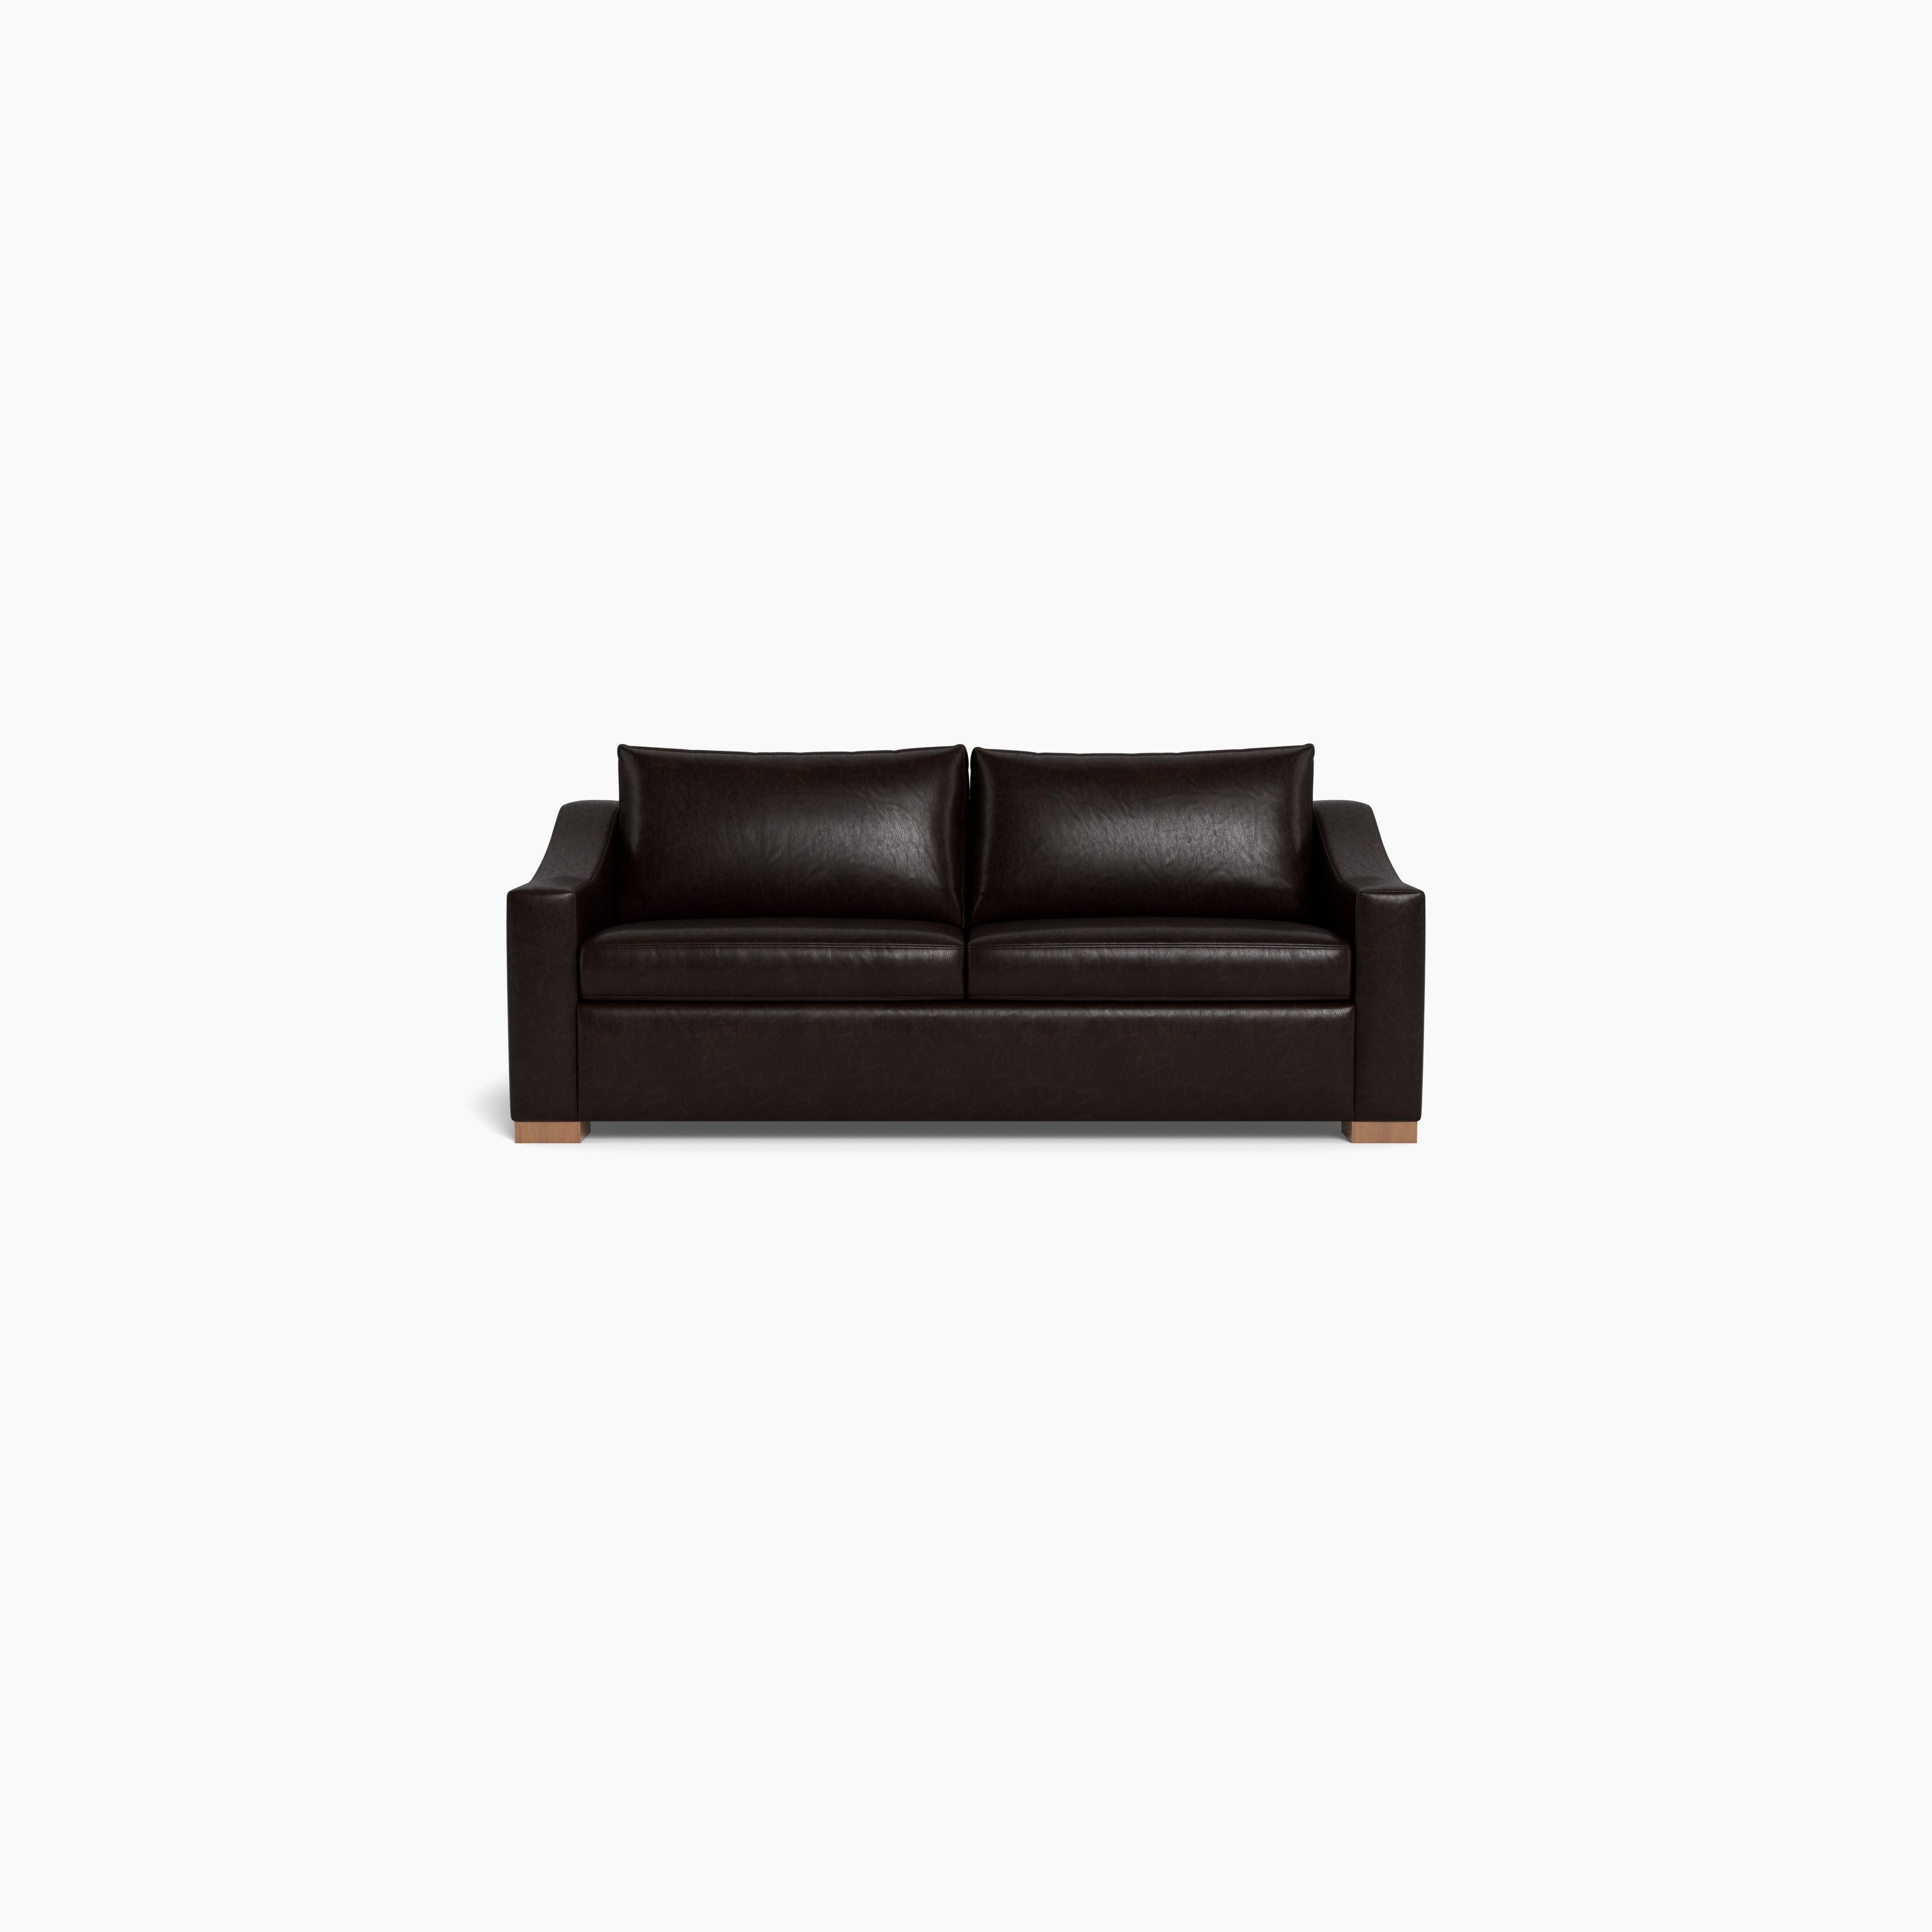 Fremont Sofa